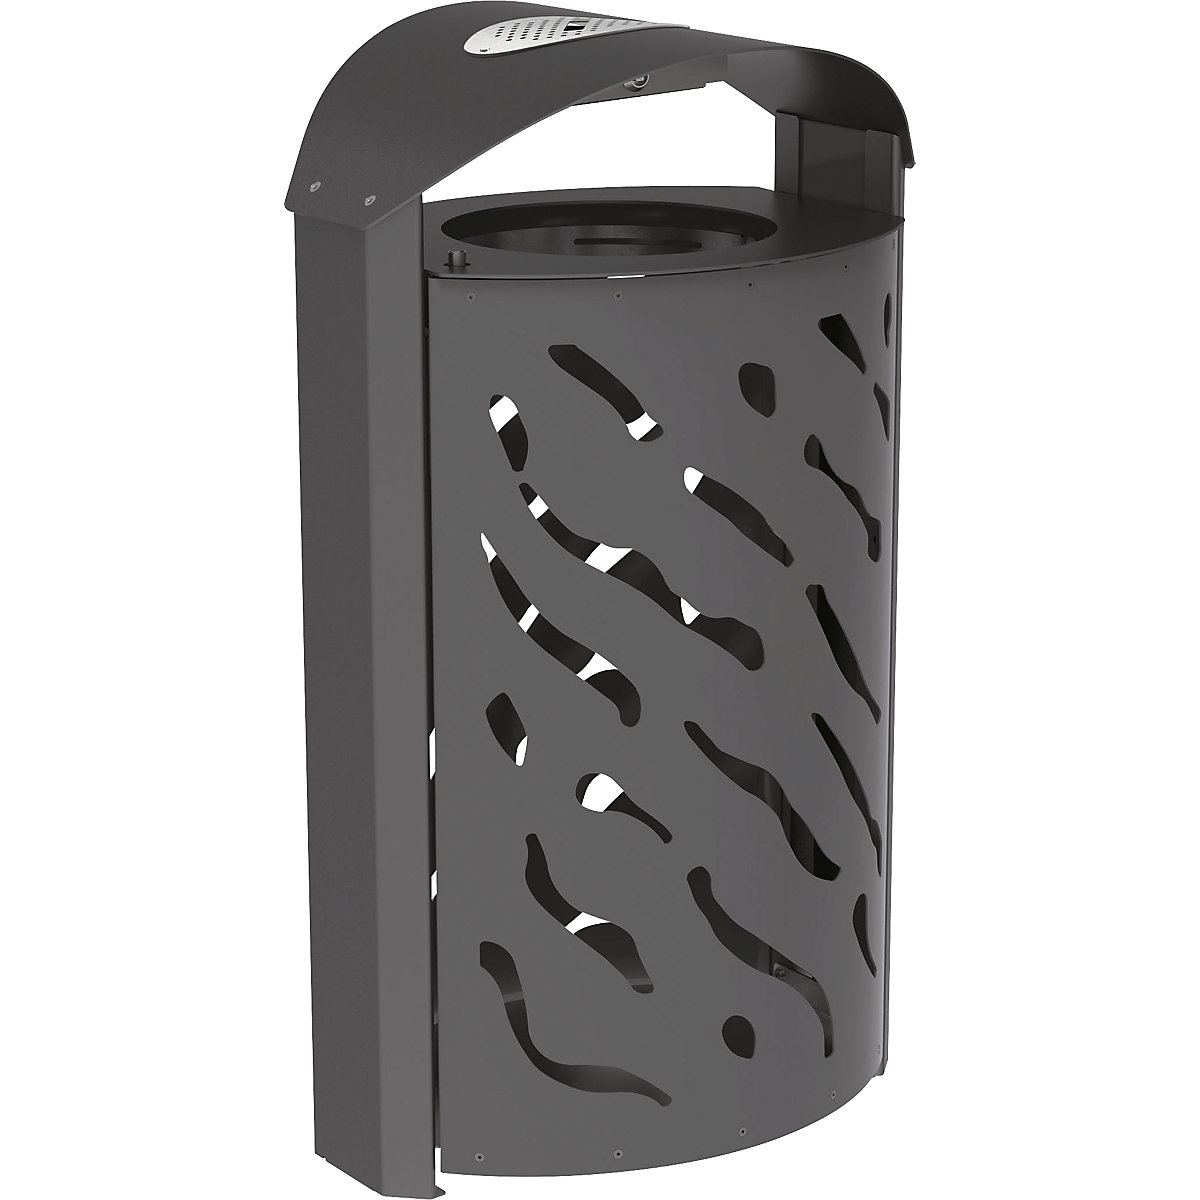 VENEDIG outdoor waste basket with ashtray – PROCITY